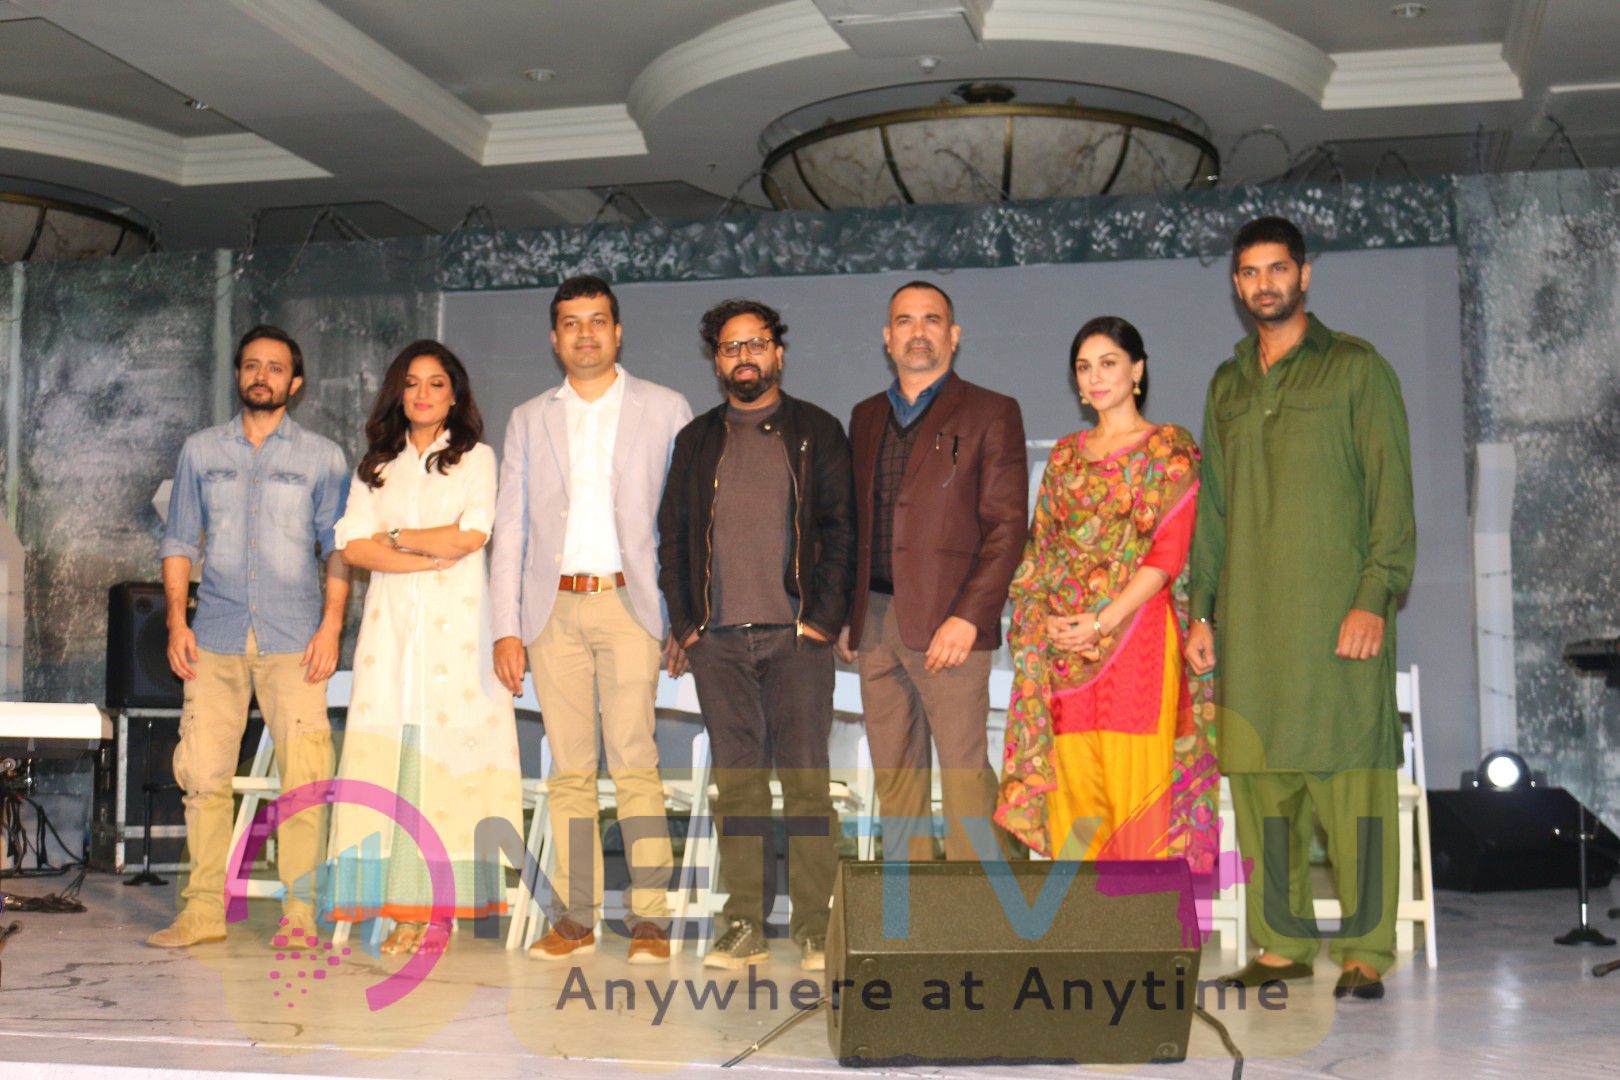 PC Of Star Plus New Show Launch P O W Bandi Yuddh Ke Excellent Photos Hindi Gallery